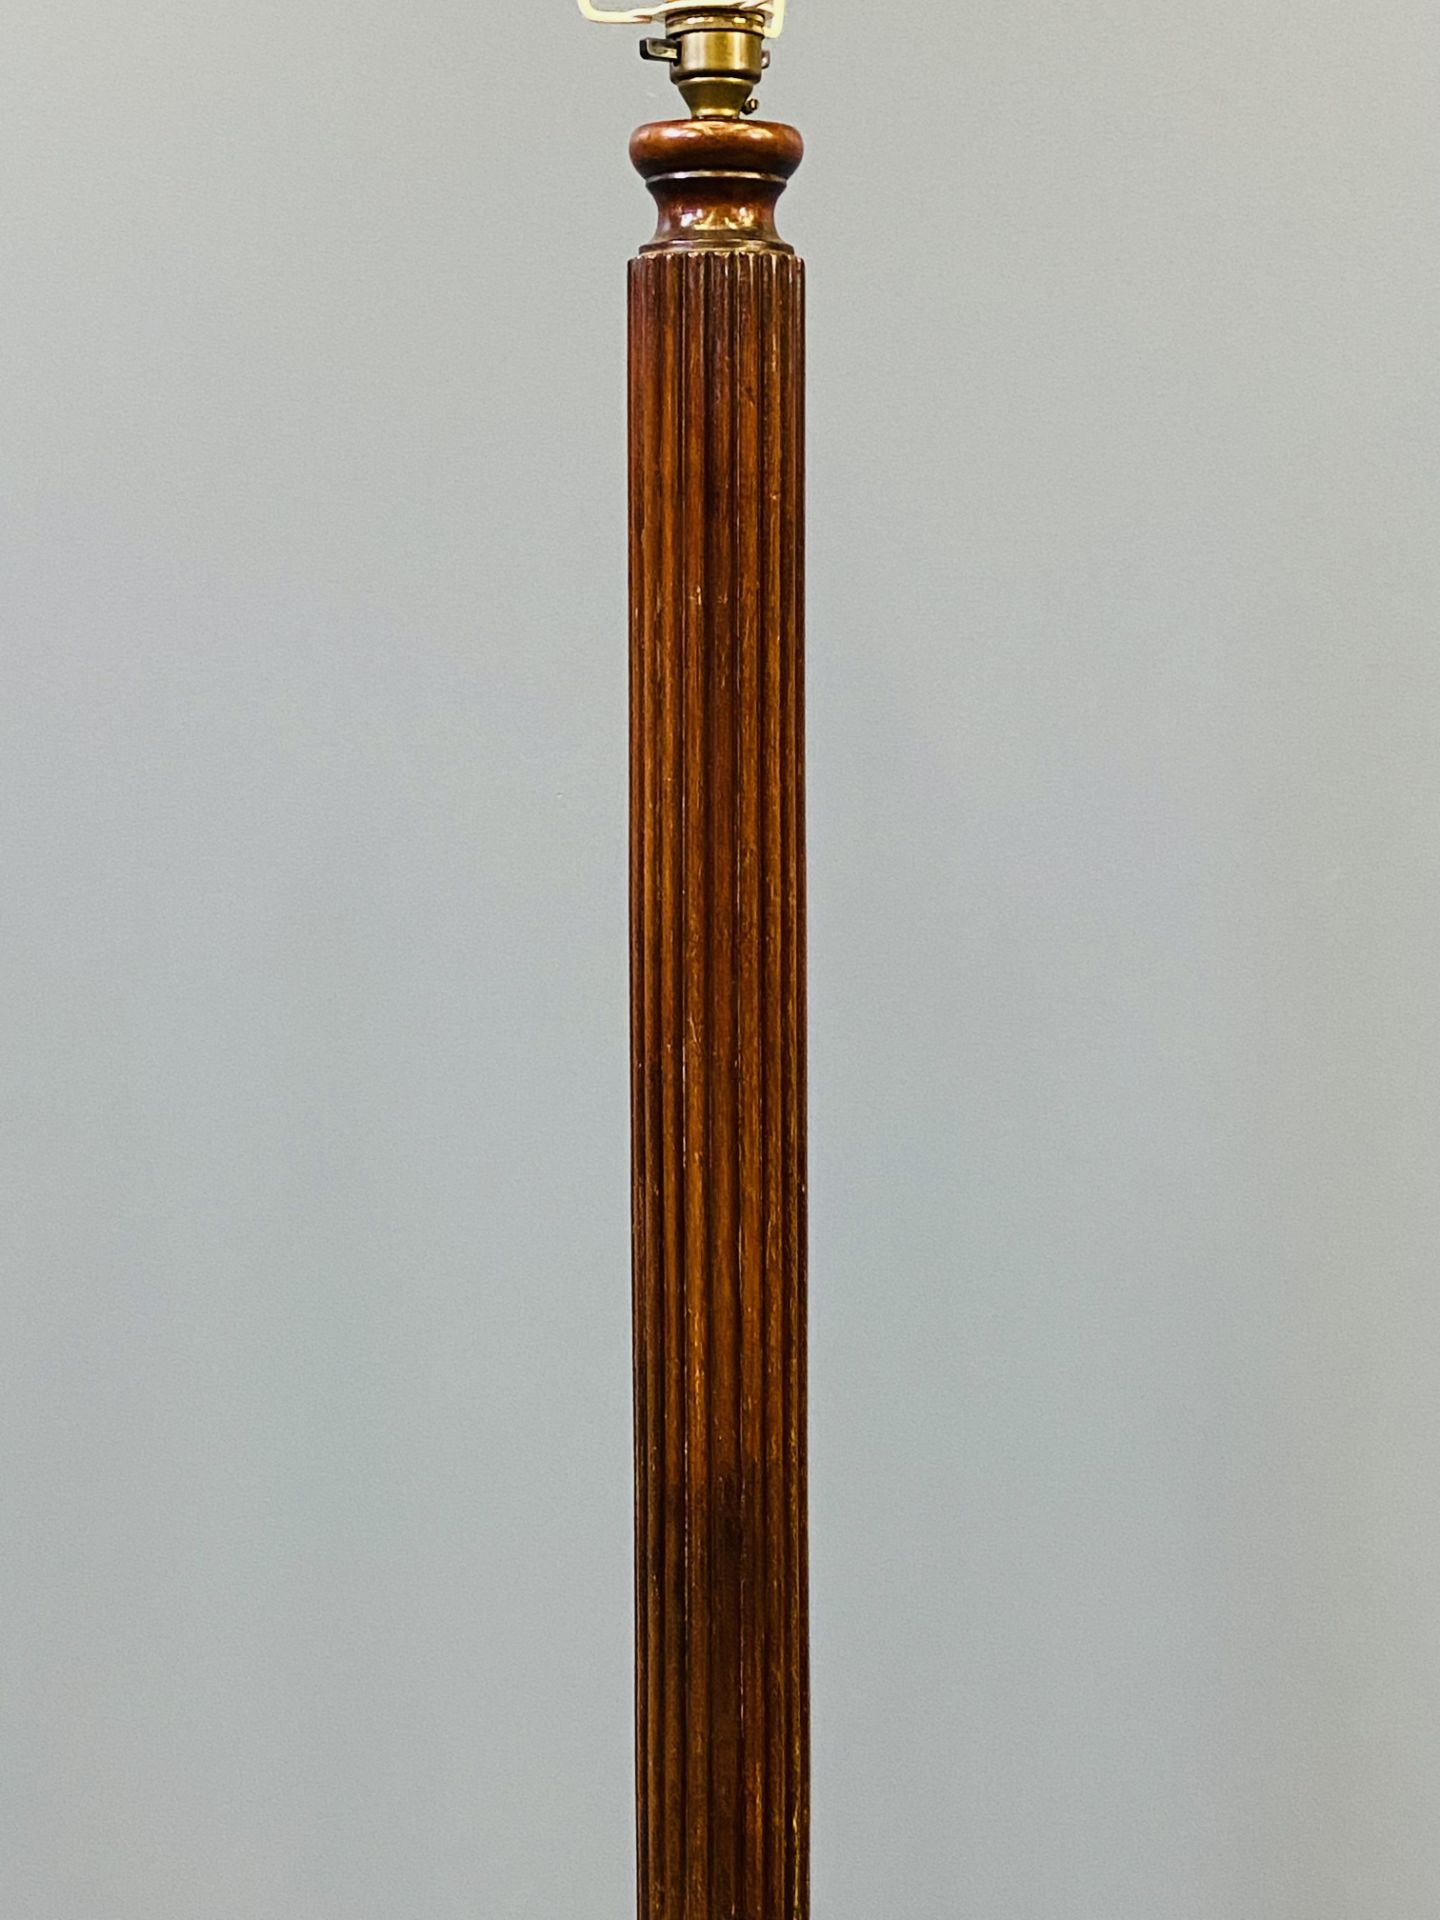 Turned mahogany standard lamp - Image 3 of 3